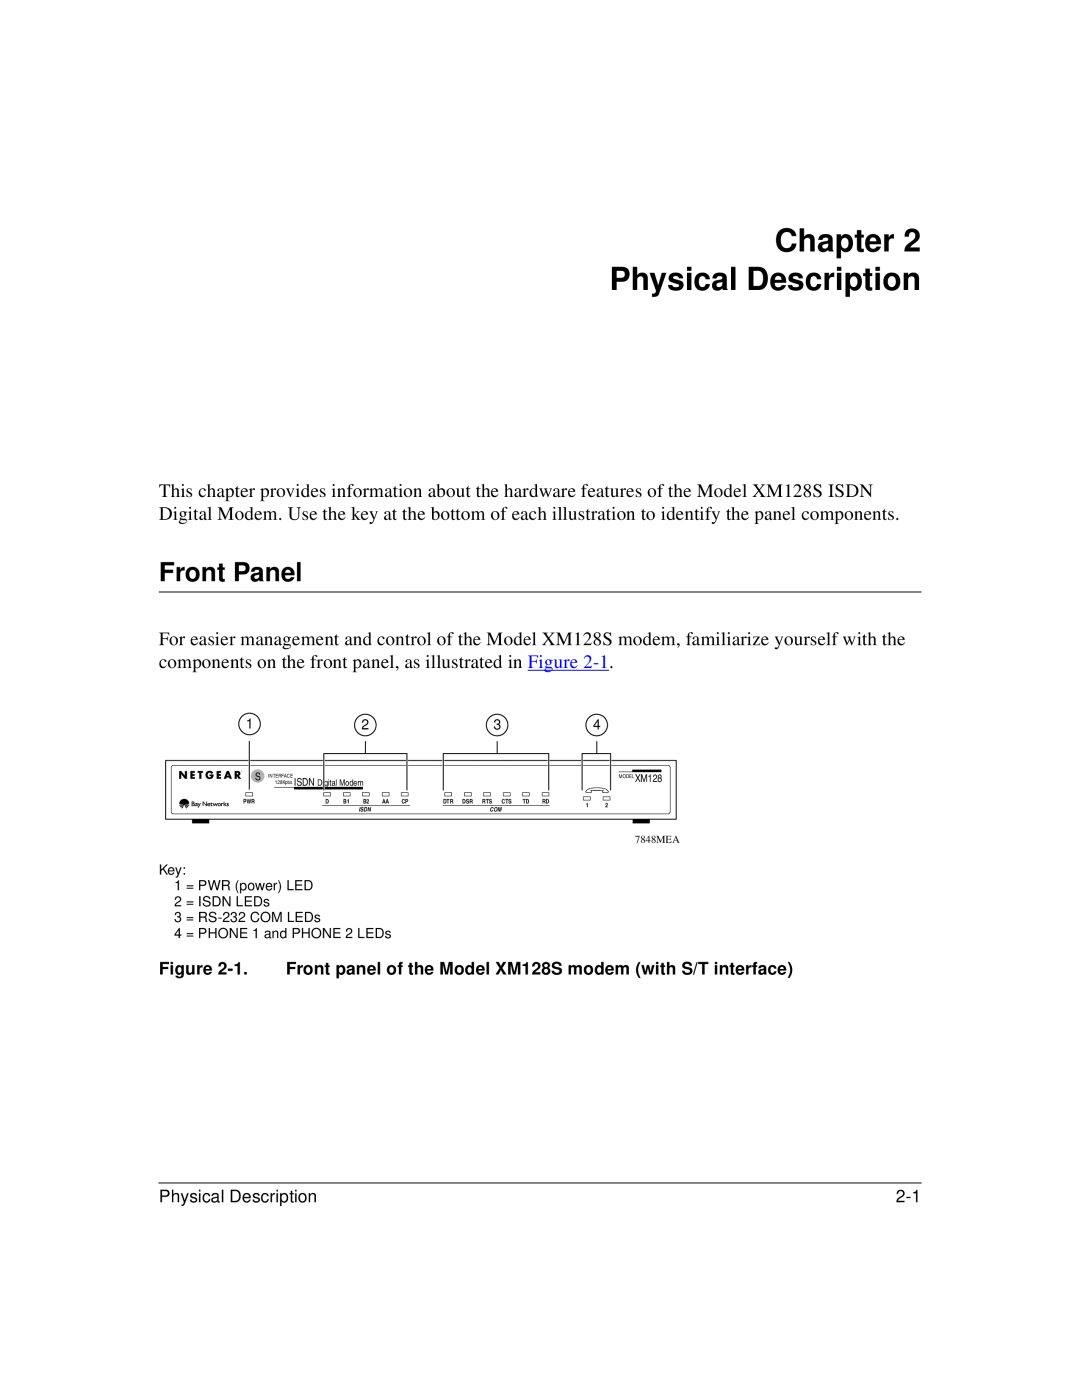 NETGEAR XM128S manual Chapter Physical Description, Front Panel 